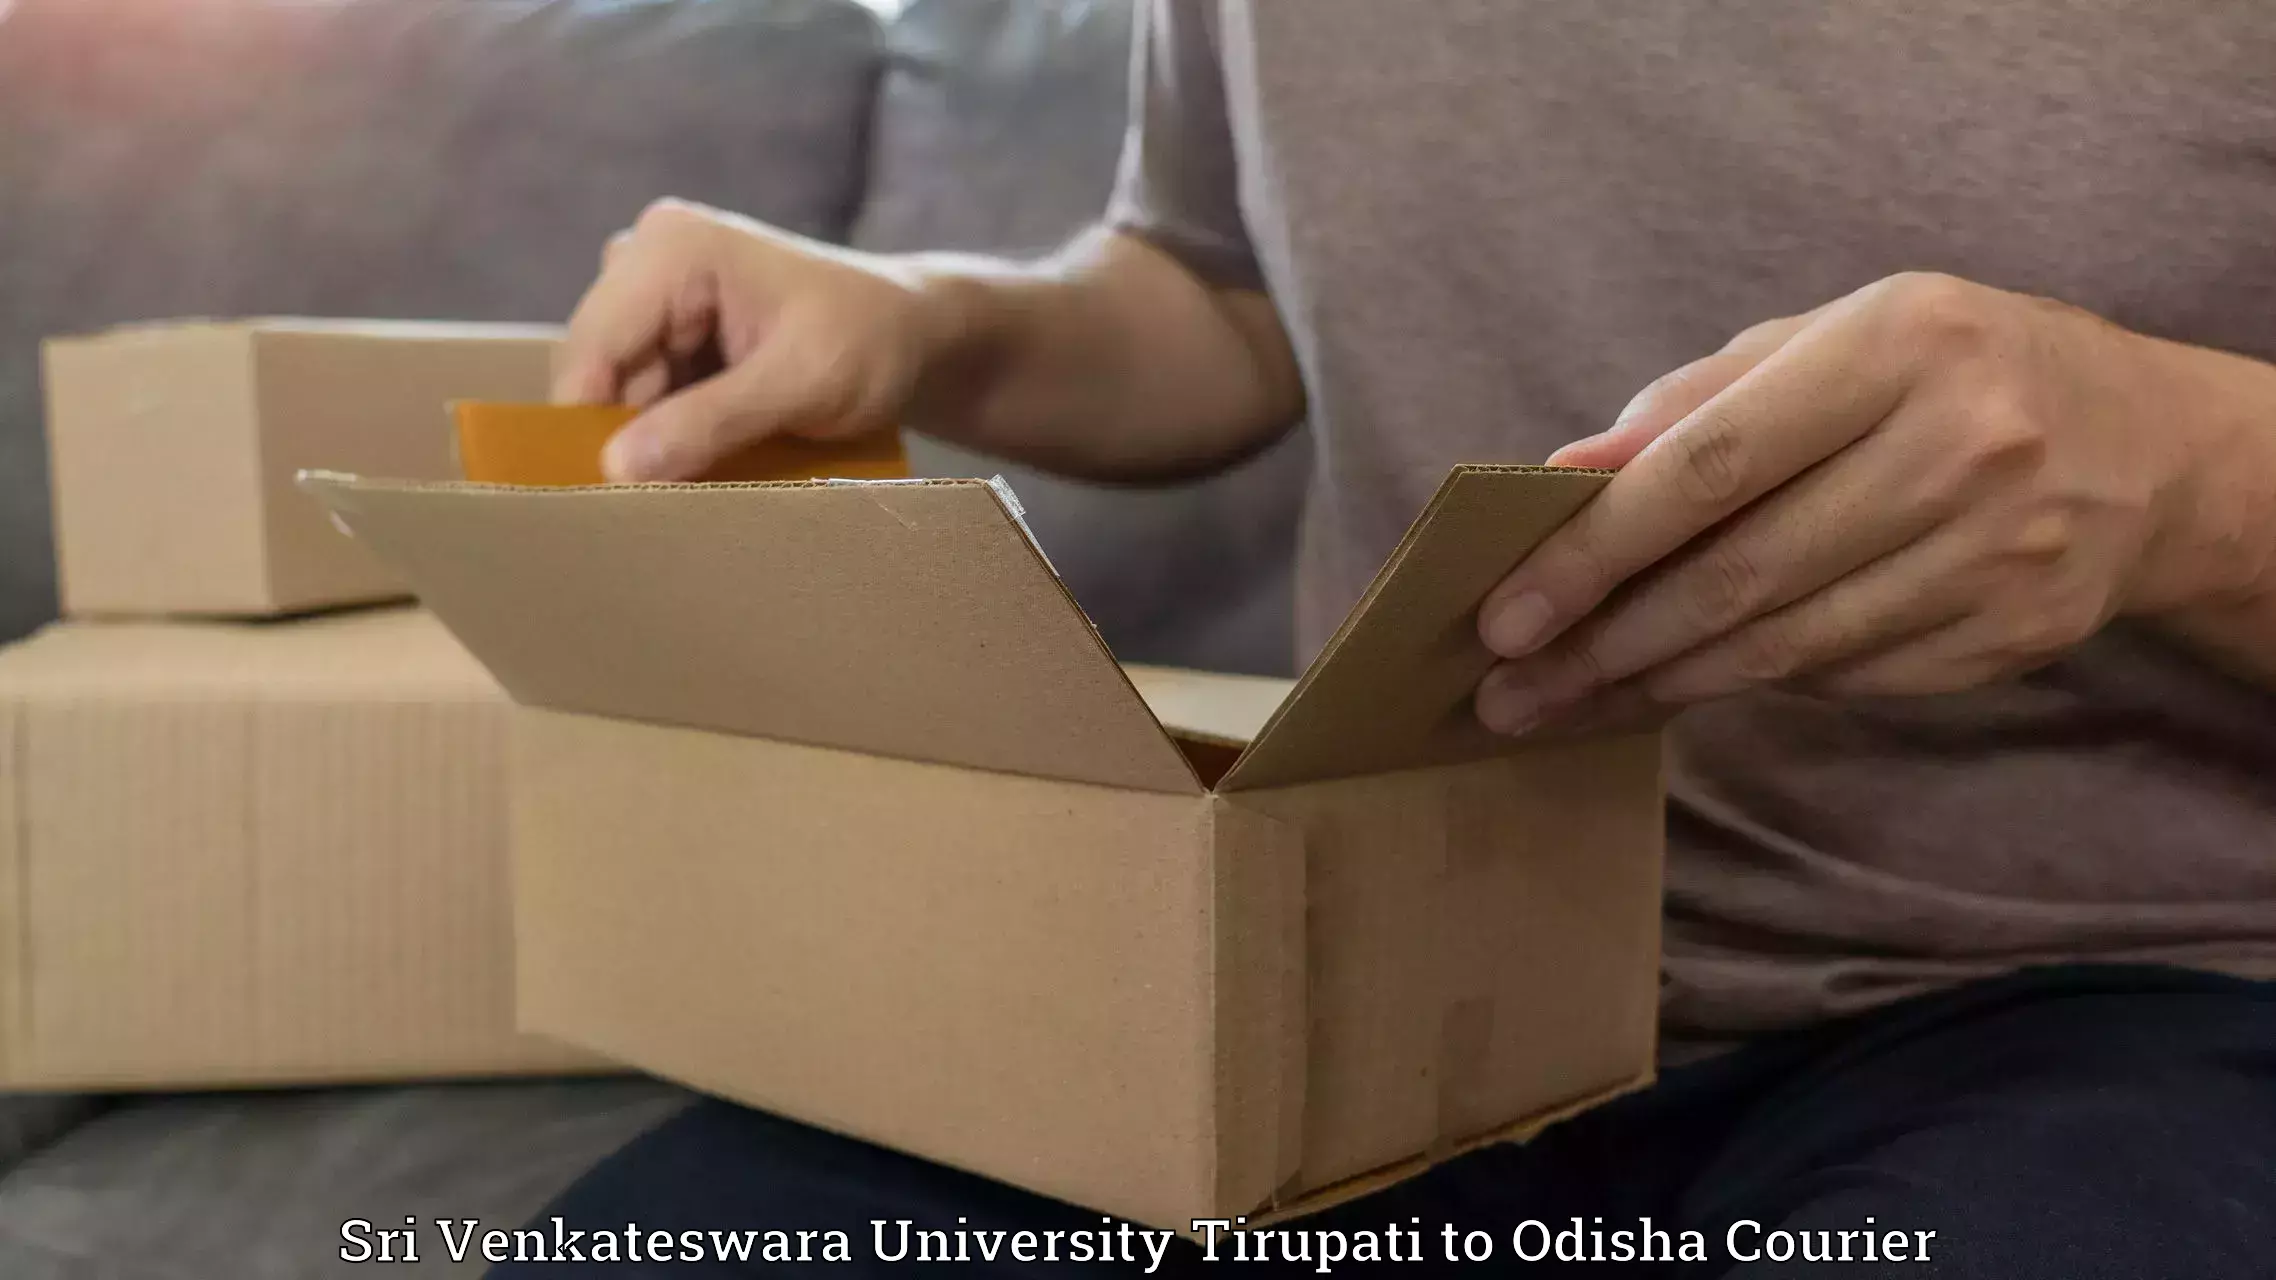 Easy return solutions Sri Venkateswara University Tirupati to Odisha